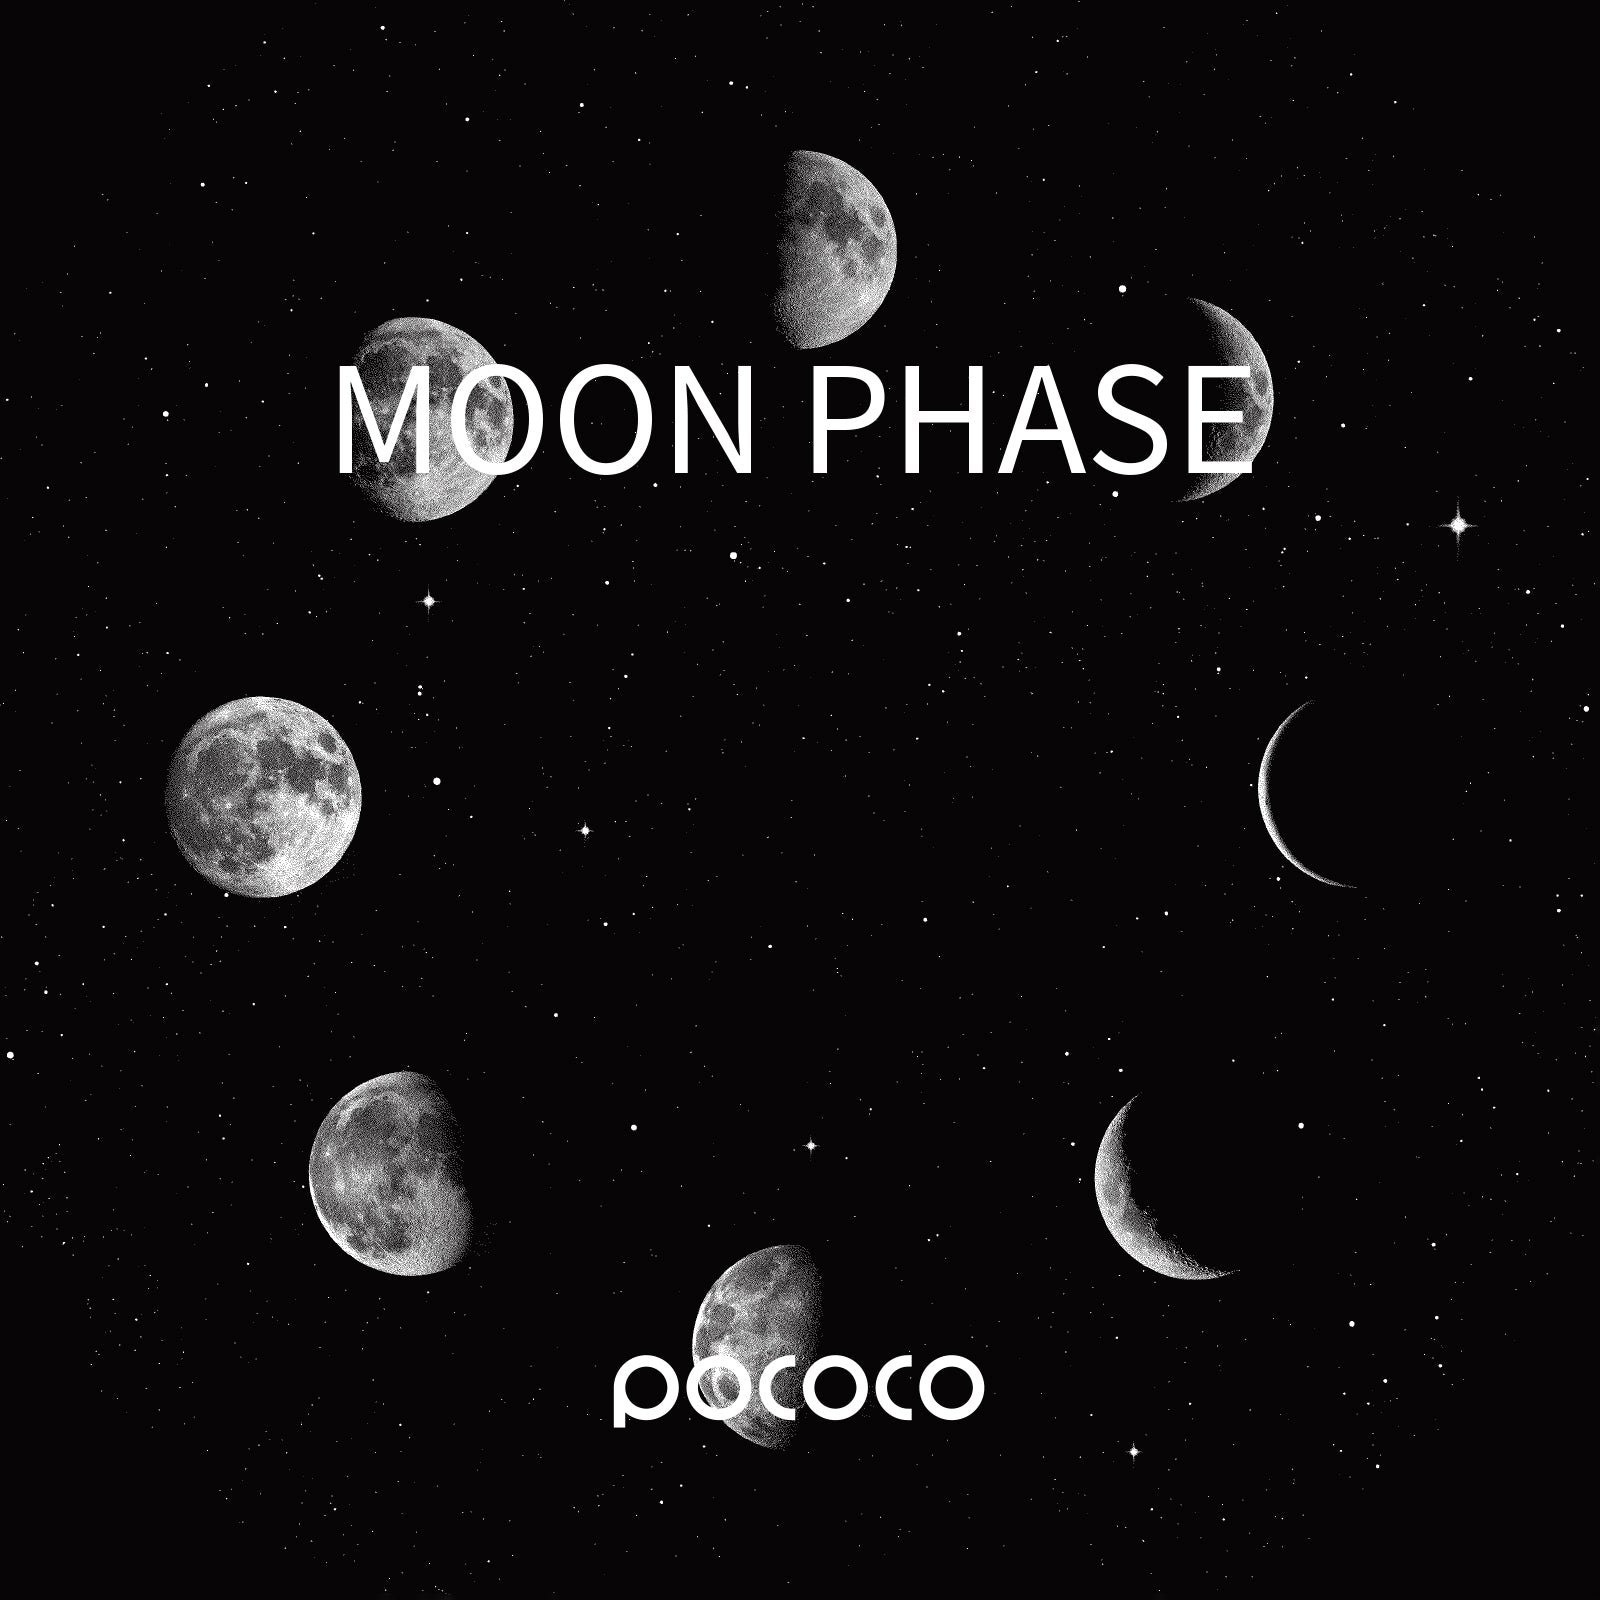 POCOCO Galaxy Projector Disc - Moon Phase